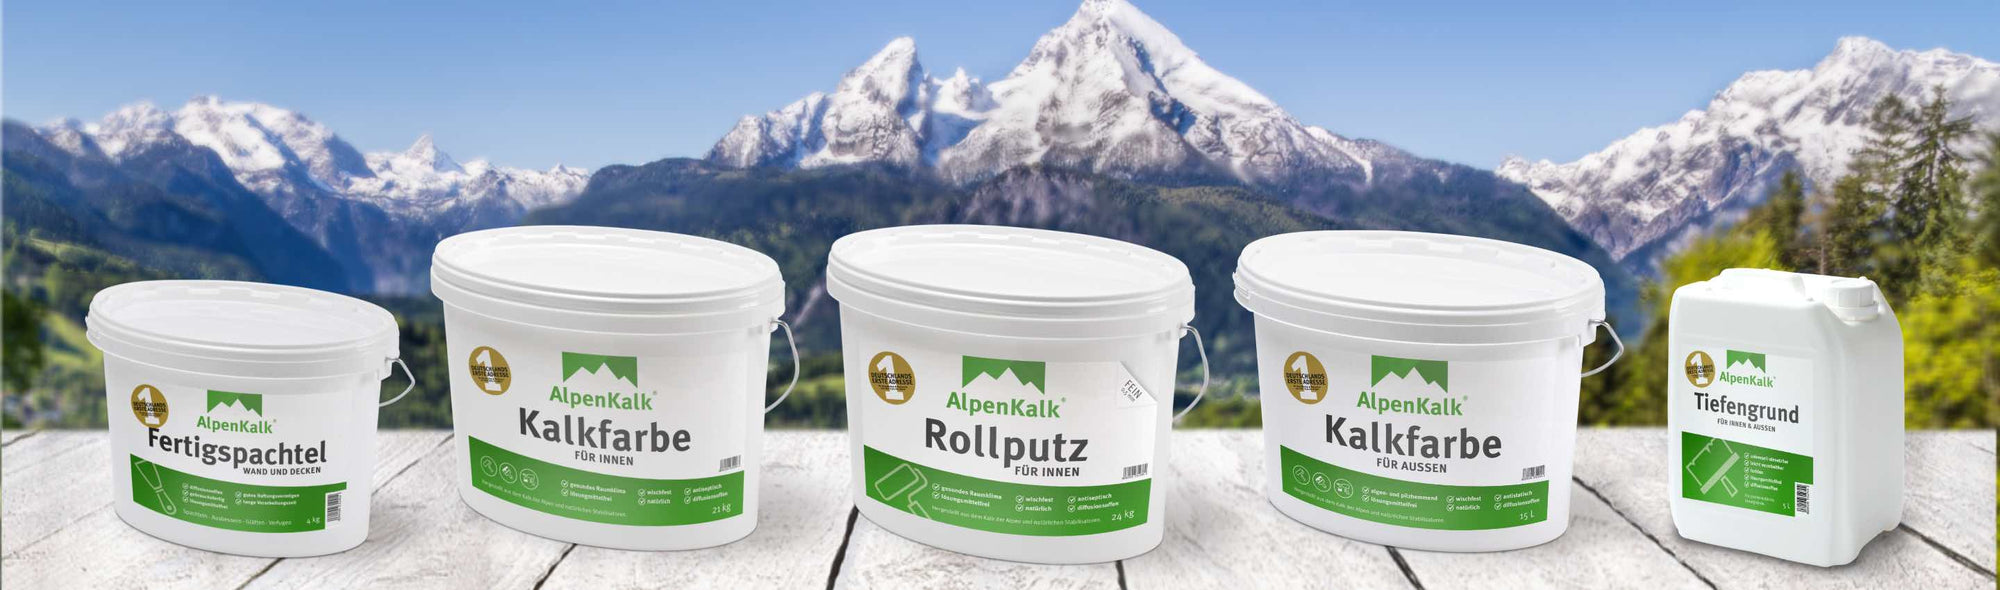 Alpenkalk Produktpalette vor einem Bergpanorama